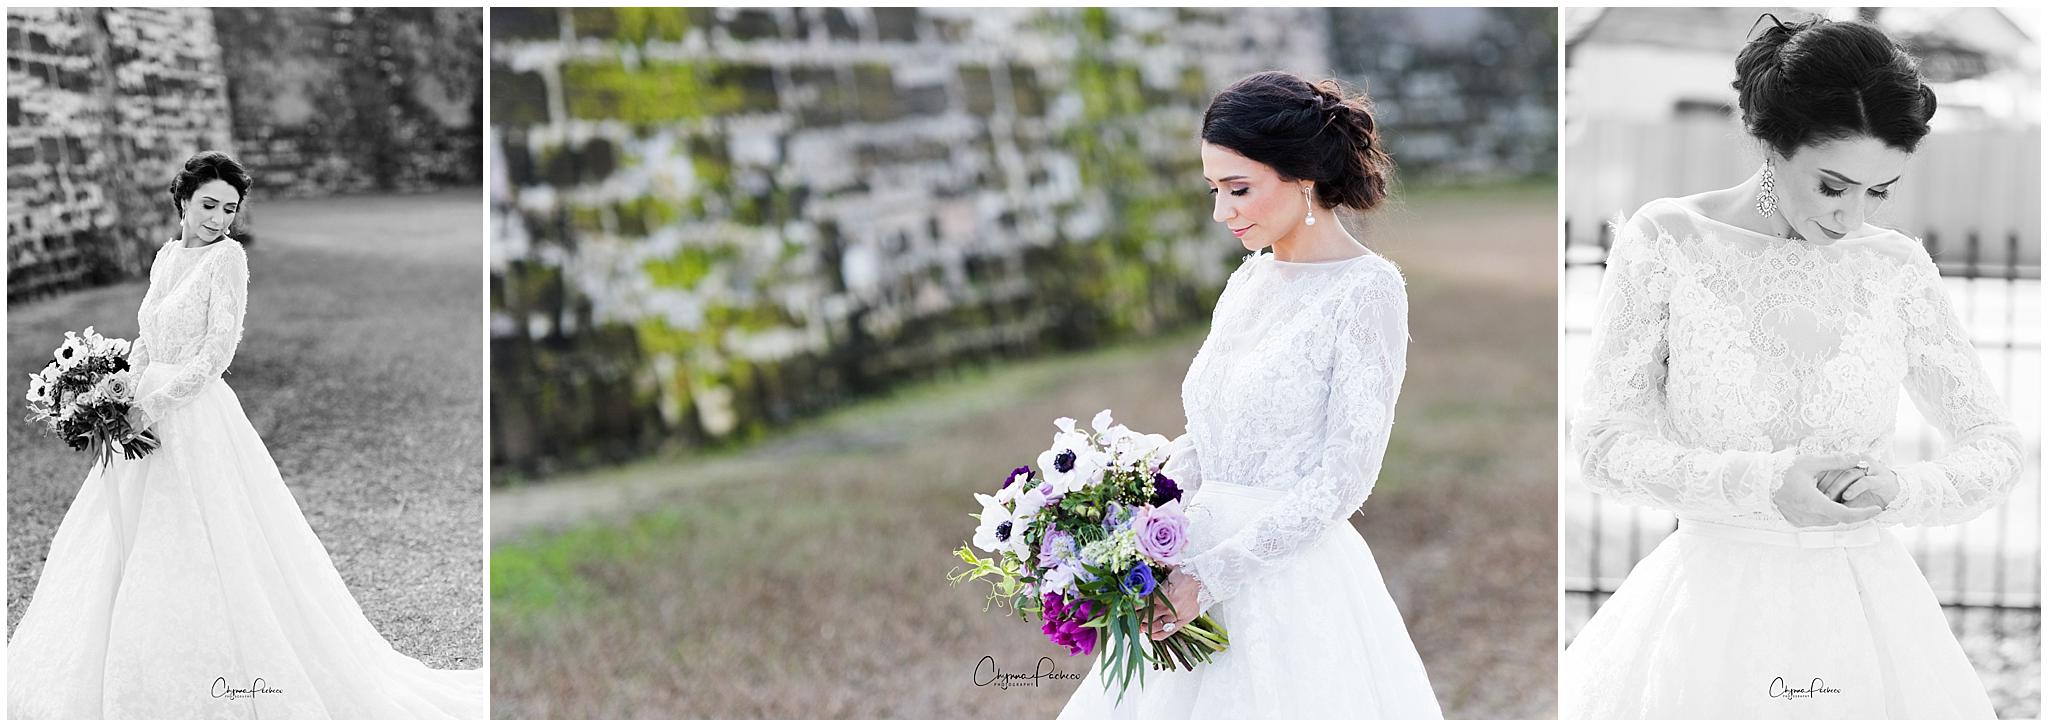 St. Augustine Weddings Bride | An Elegant and Romantic Coastal Wedding